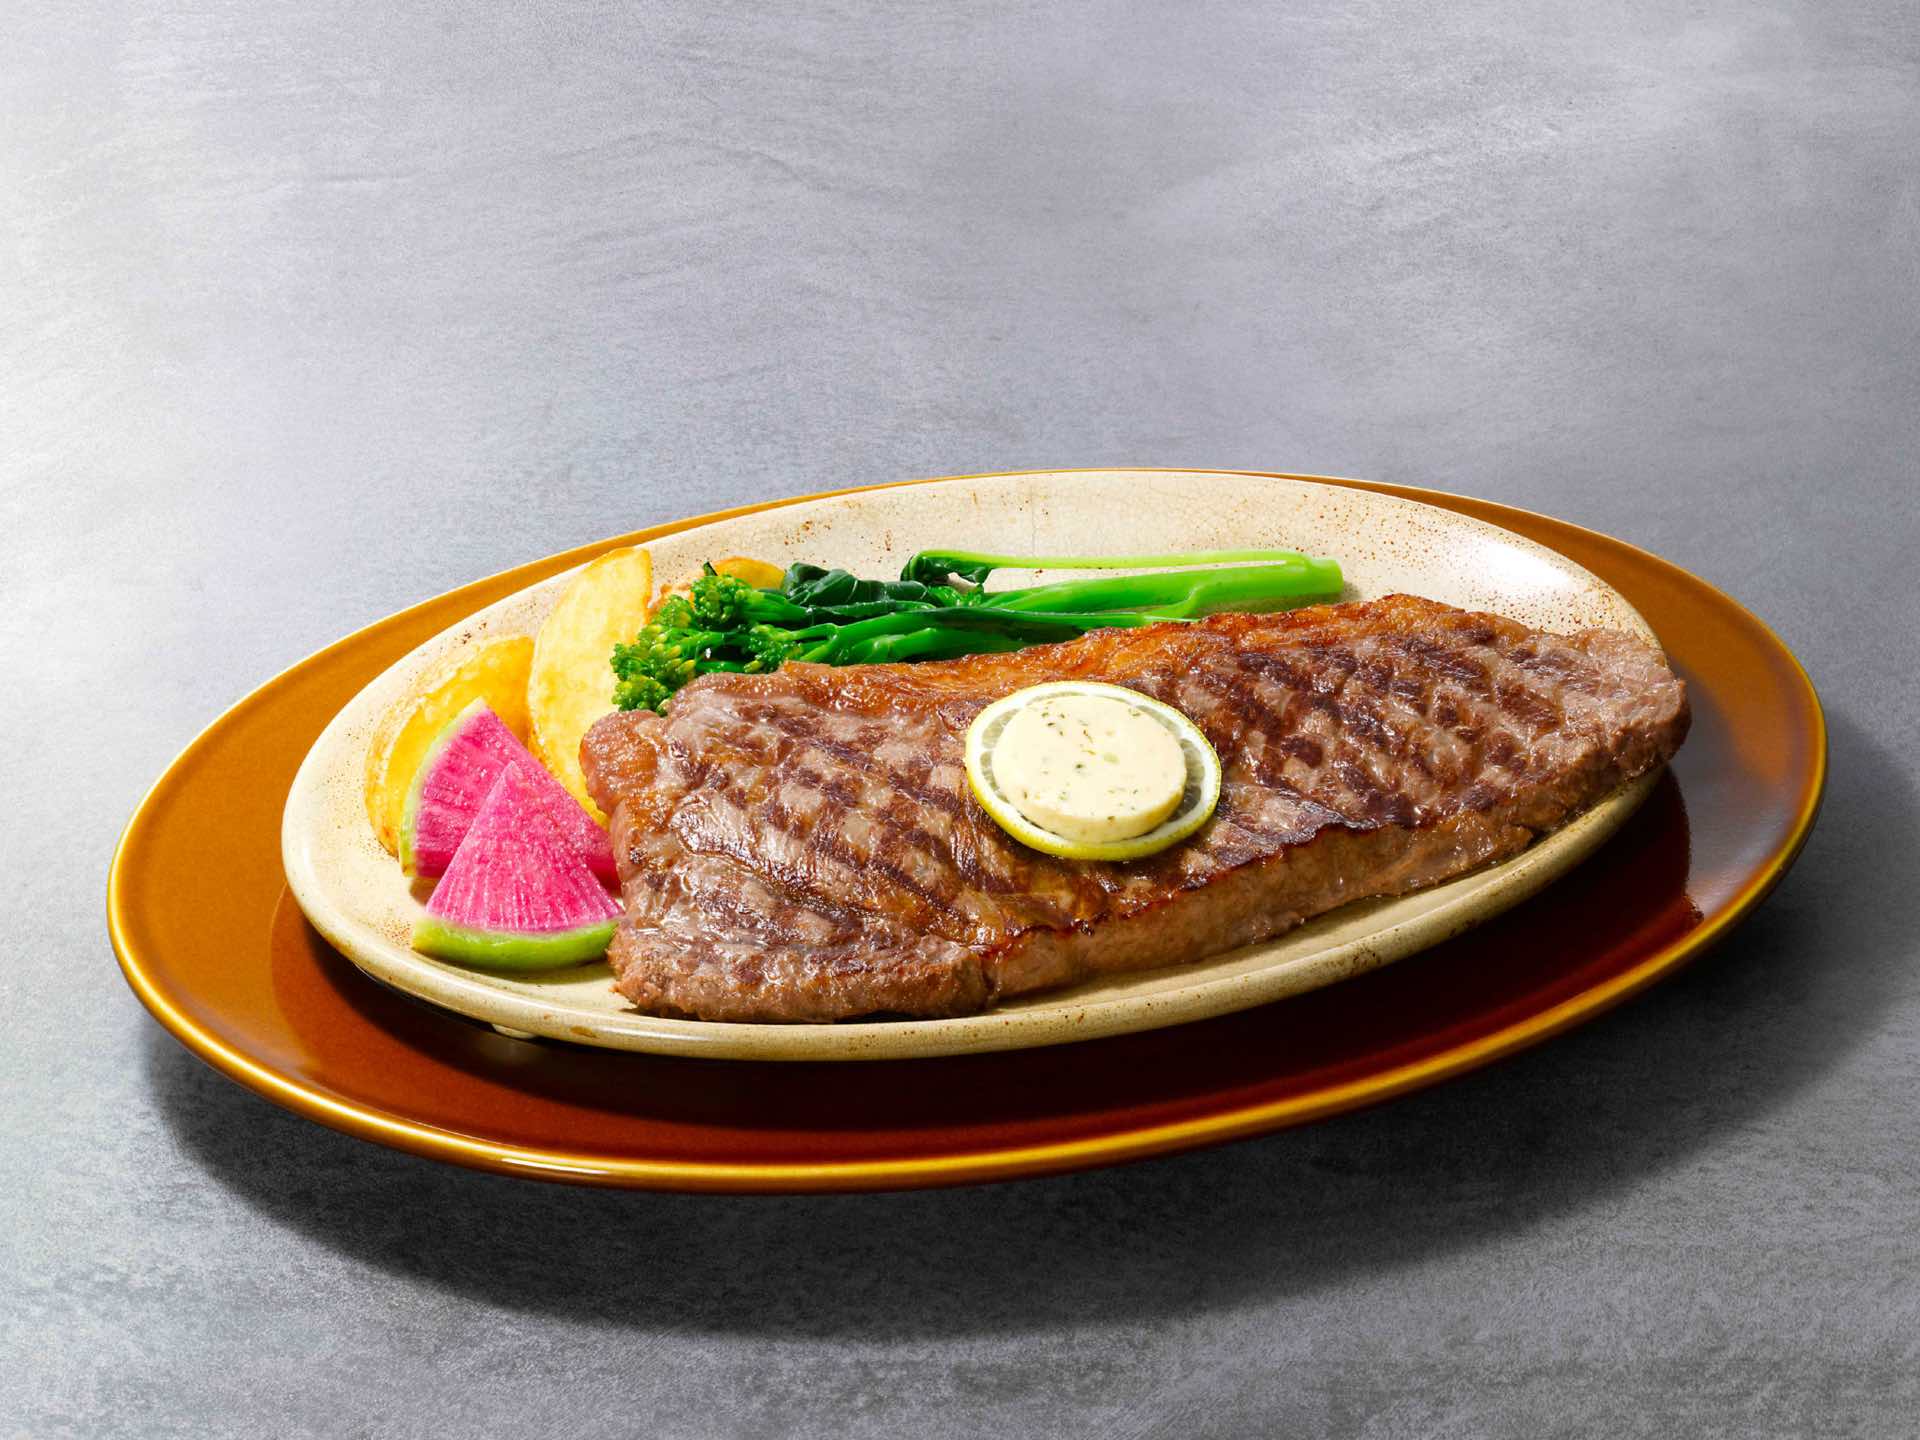 Premium Beef “ROYAL” Sirloin Steak